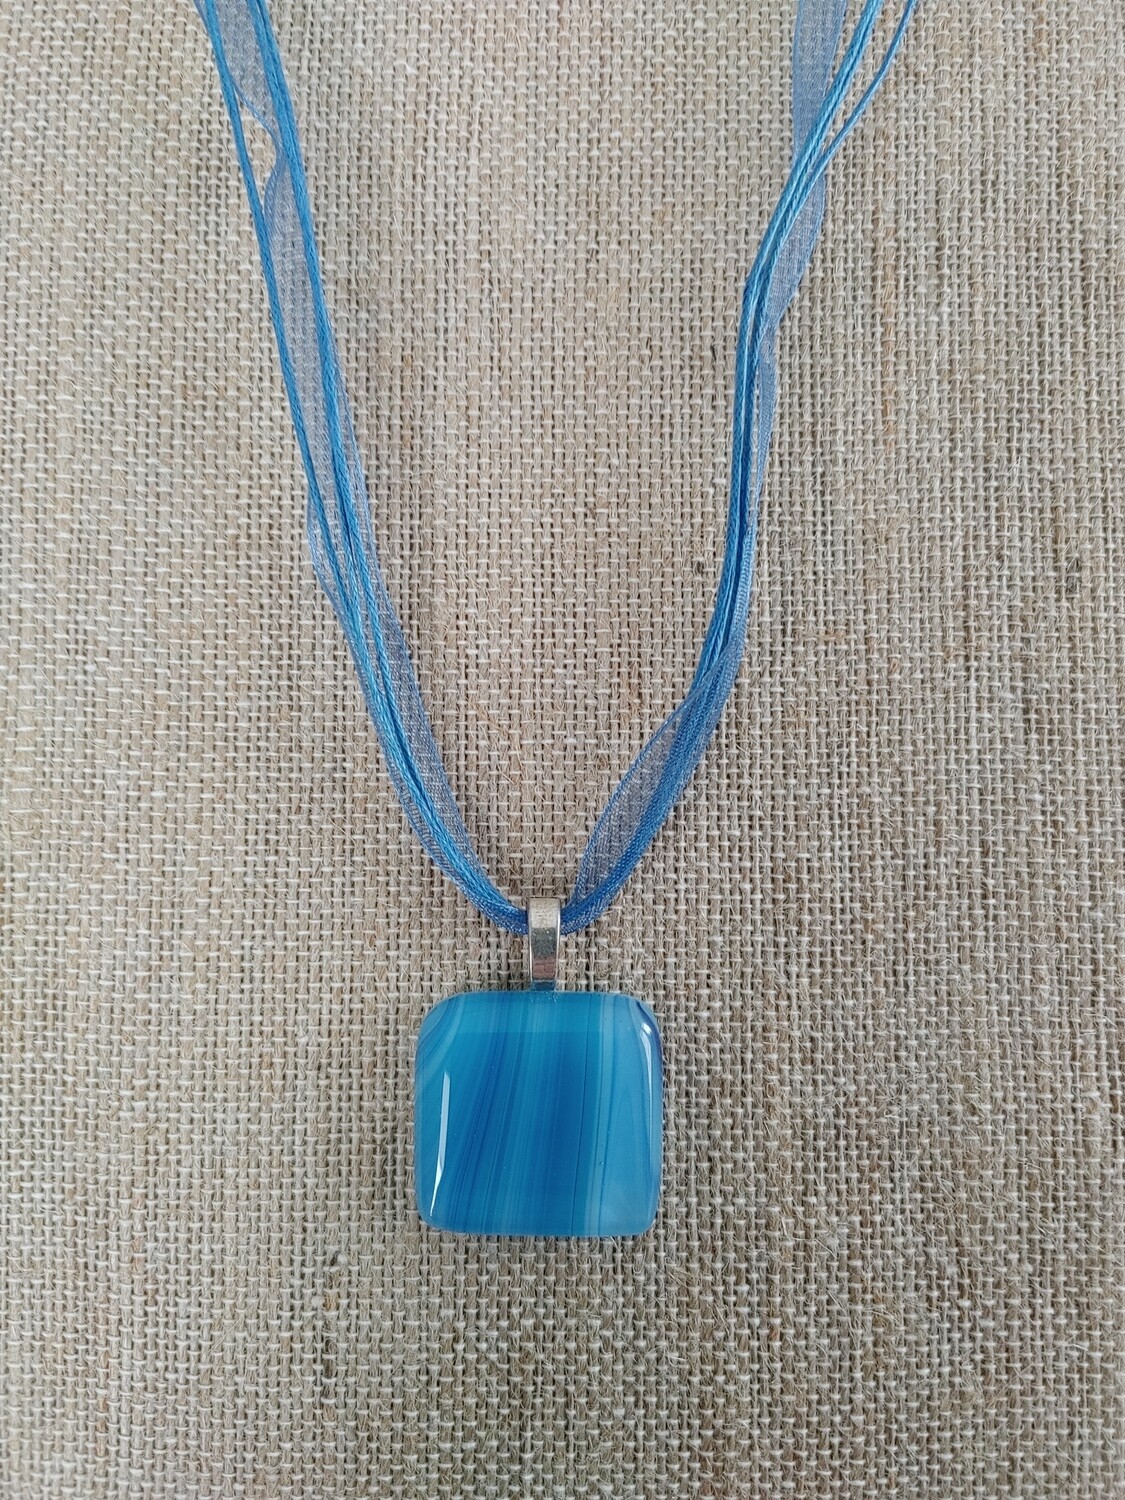 Fused Glass Pendant - Blue